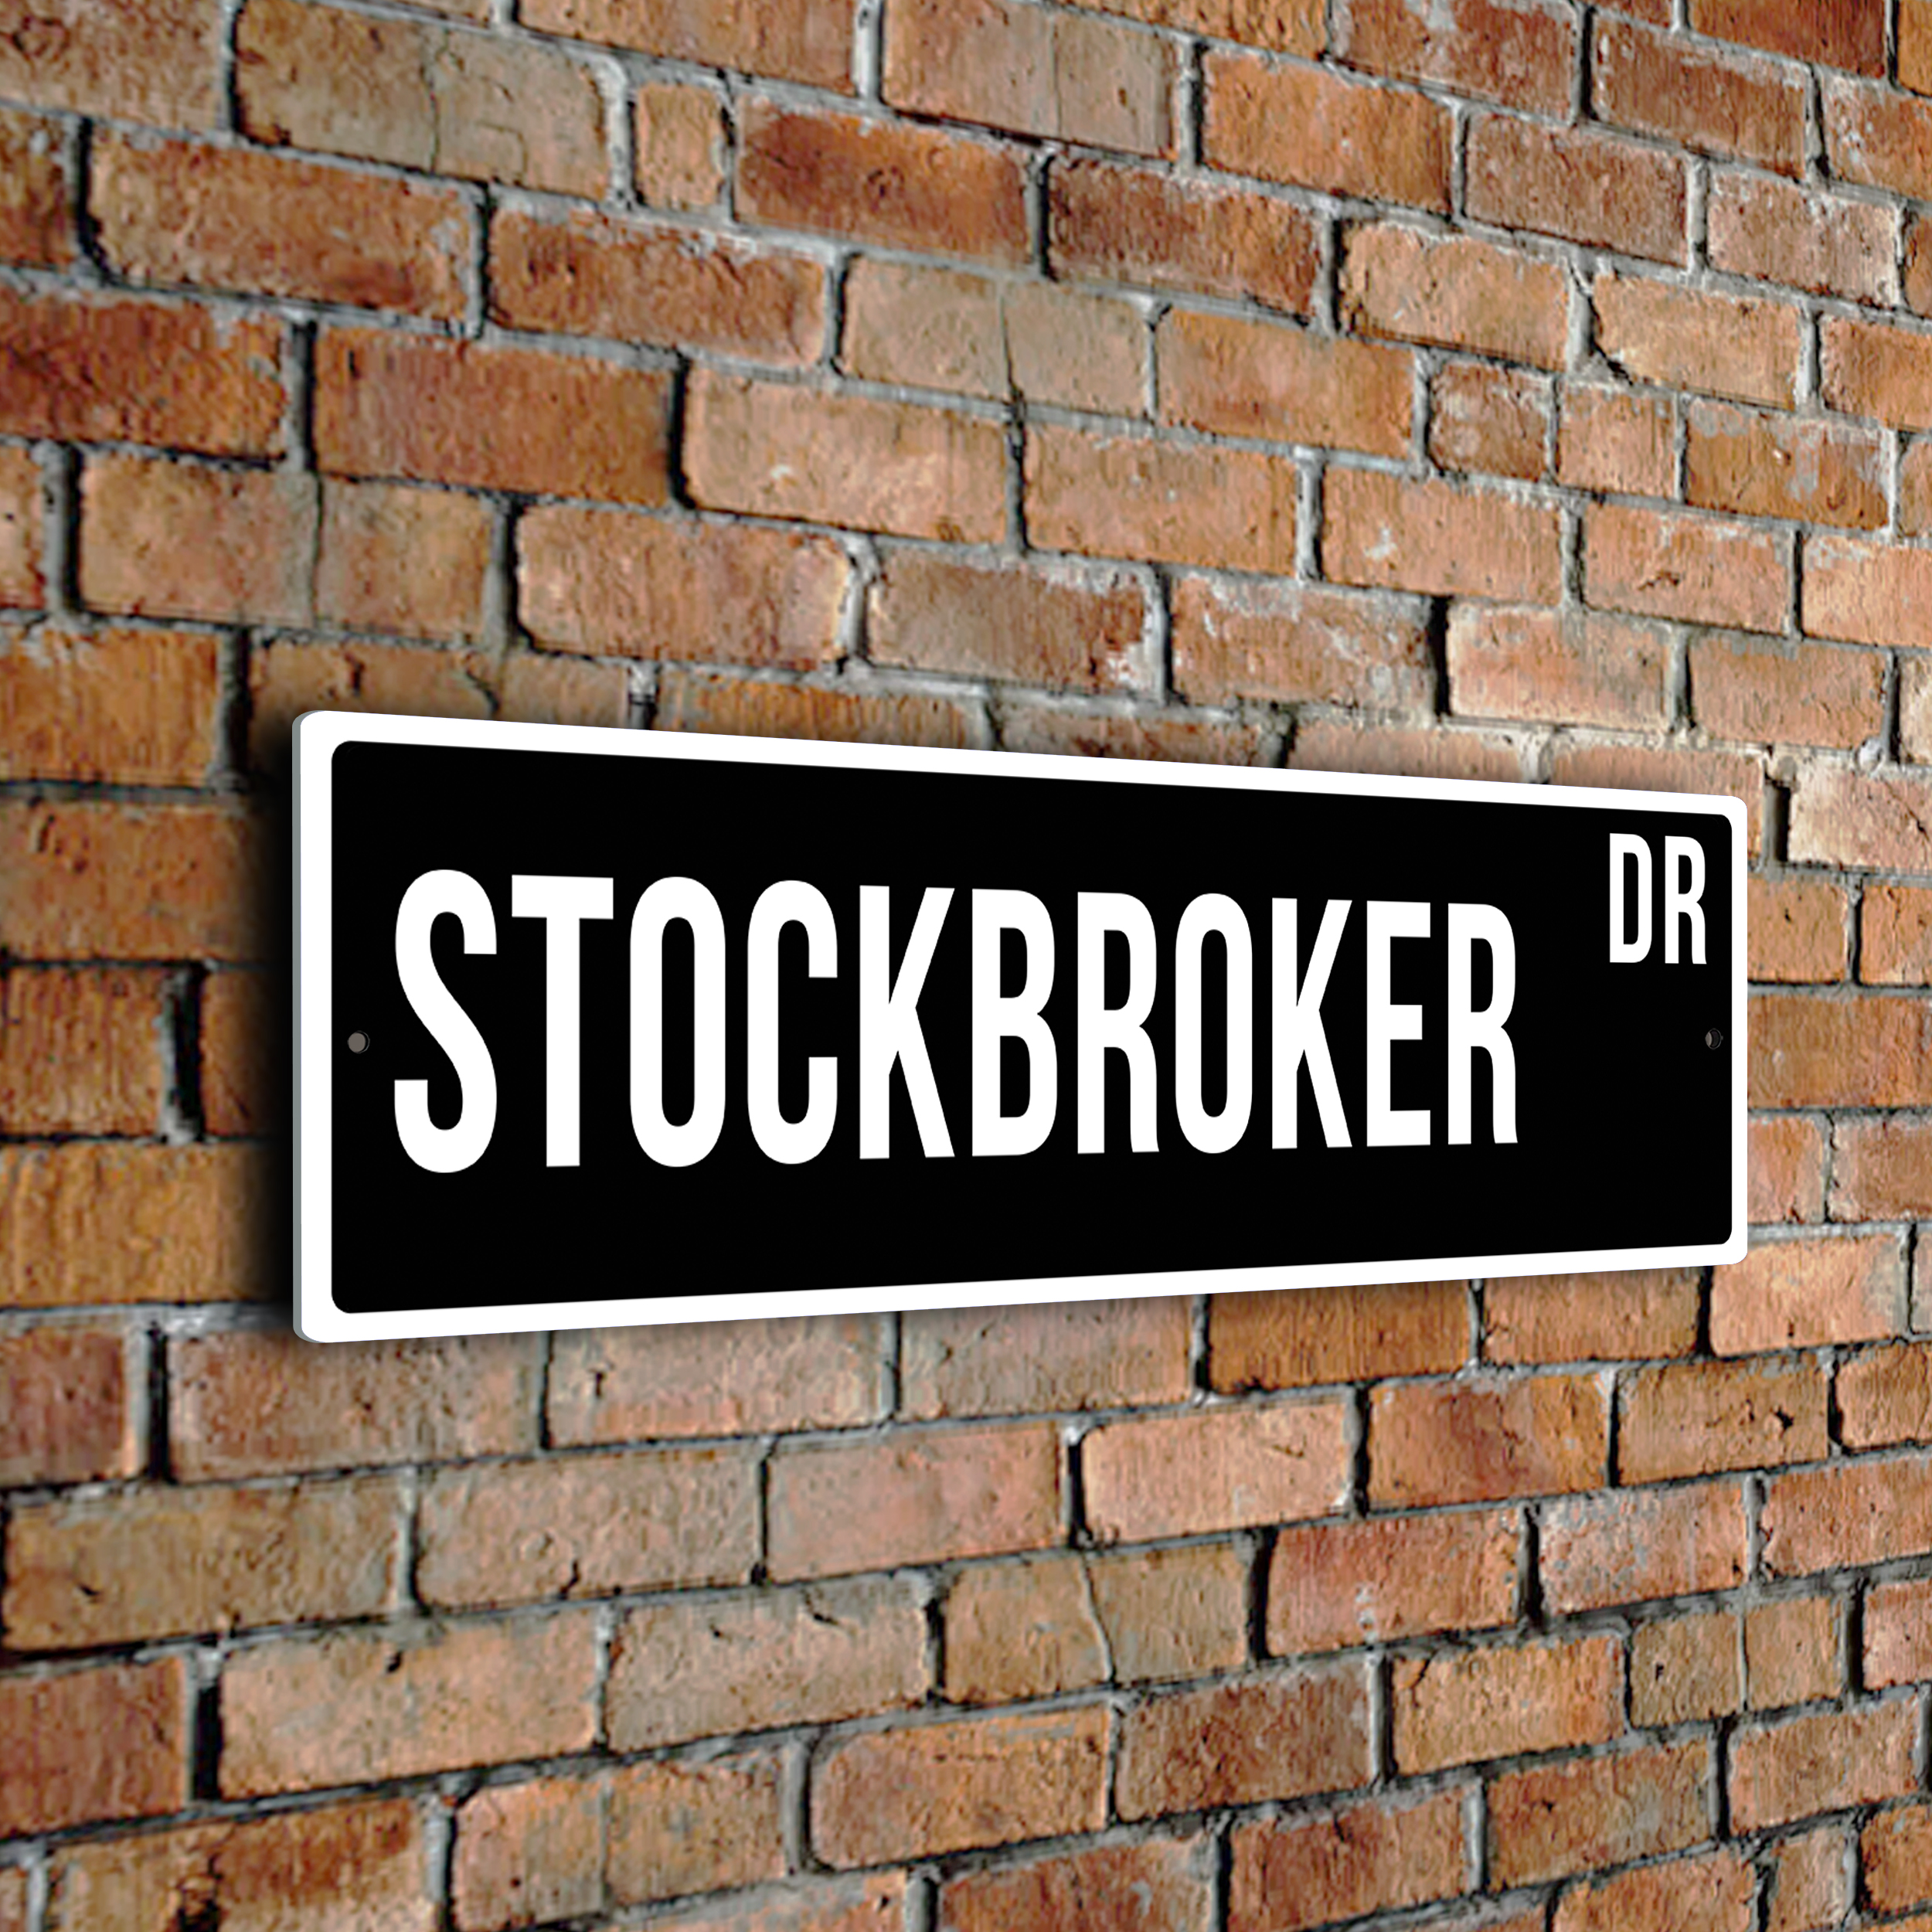 Stockbroker street sign